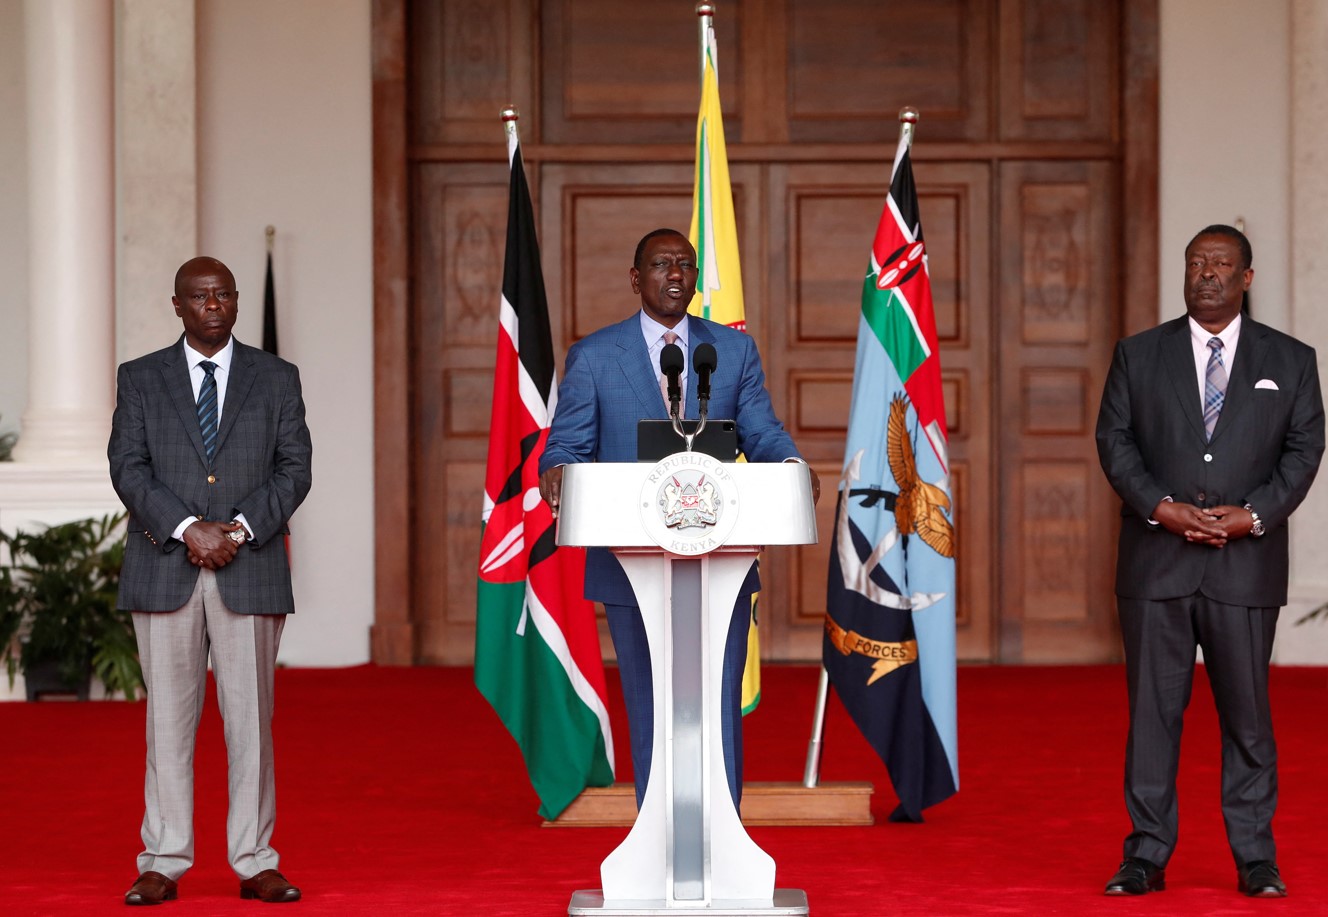 Ruto announces major reforms in anti-corruption measures